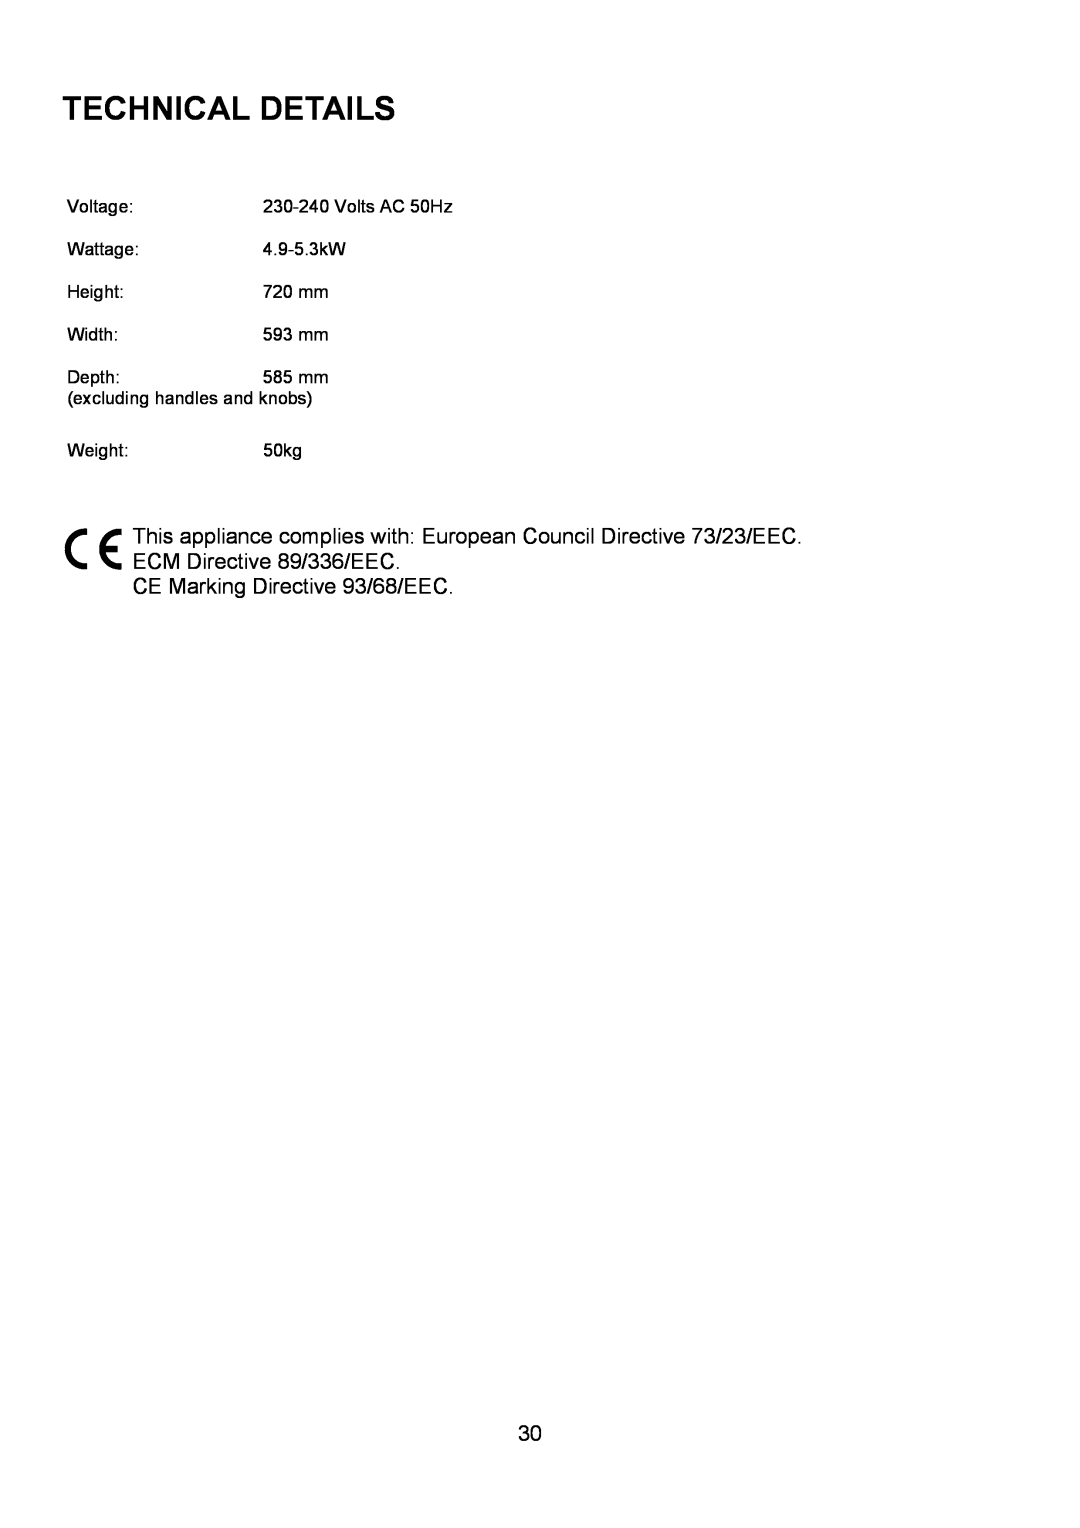 AEG U3100-4 manual Technical Details, CE Marking Directive 93/68/EEC 